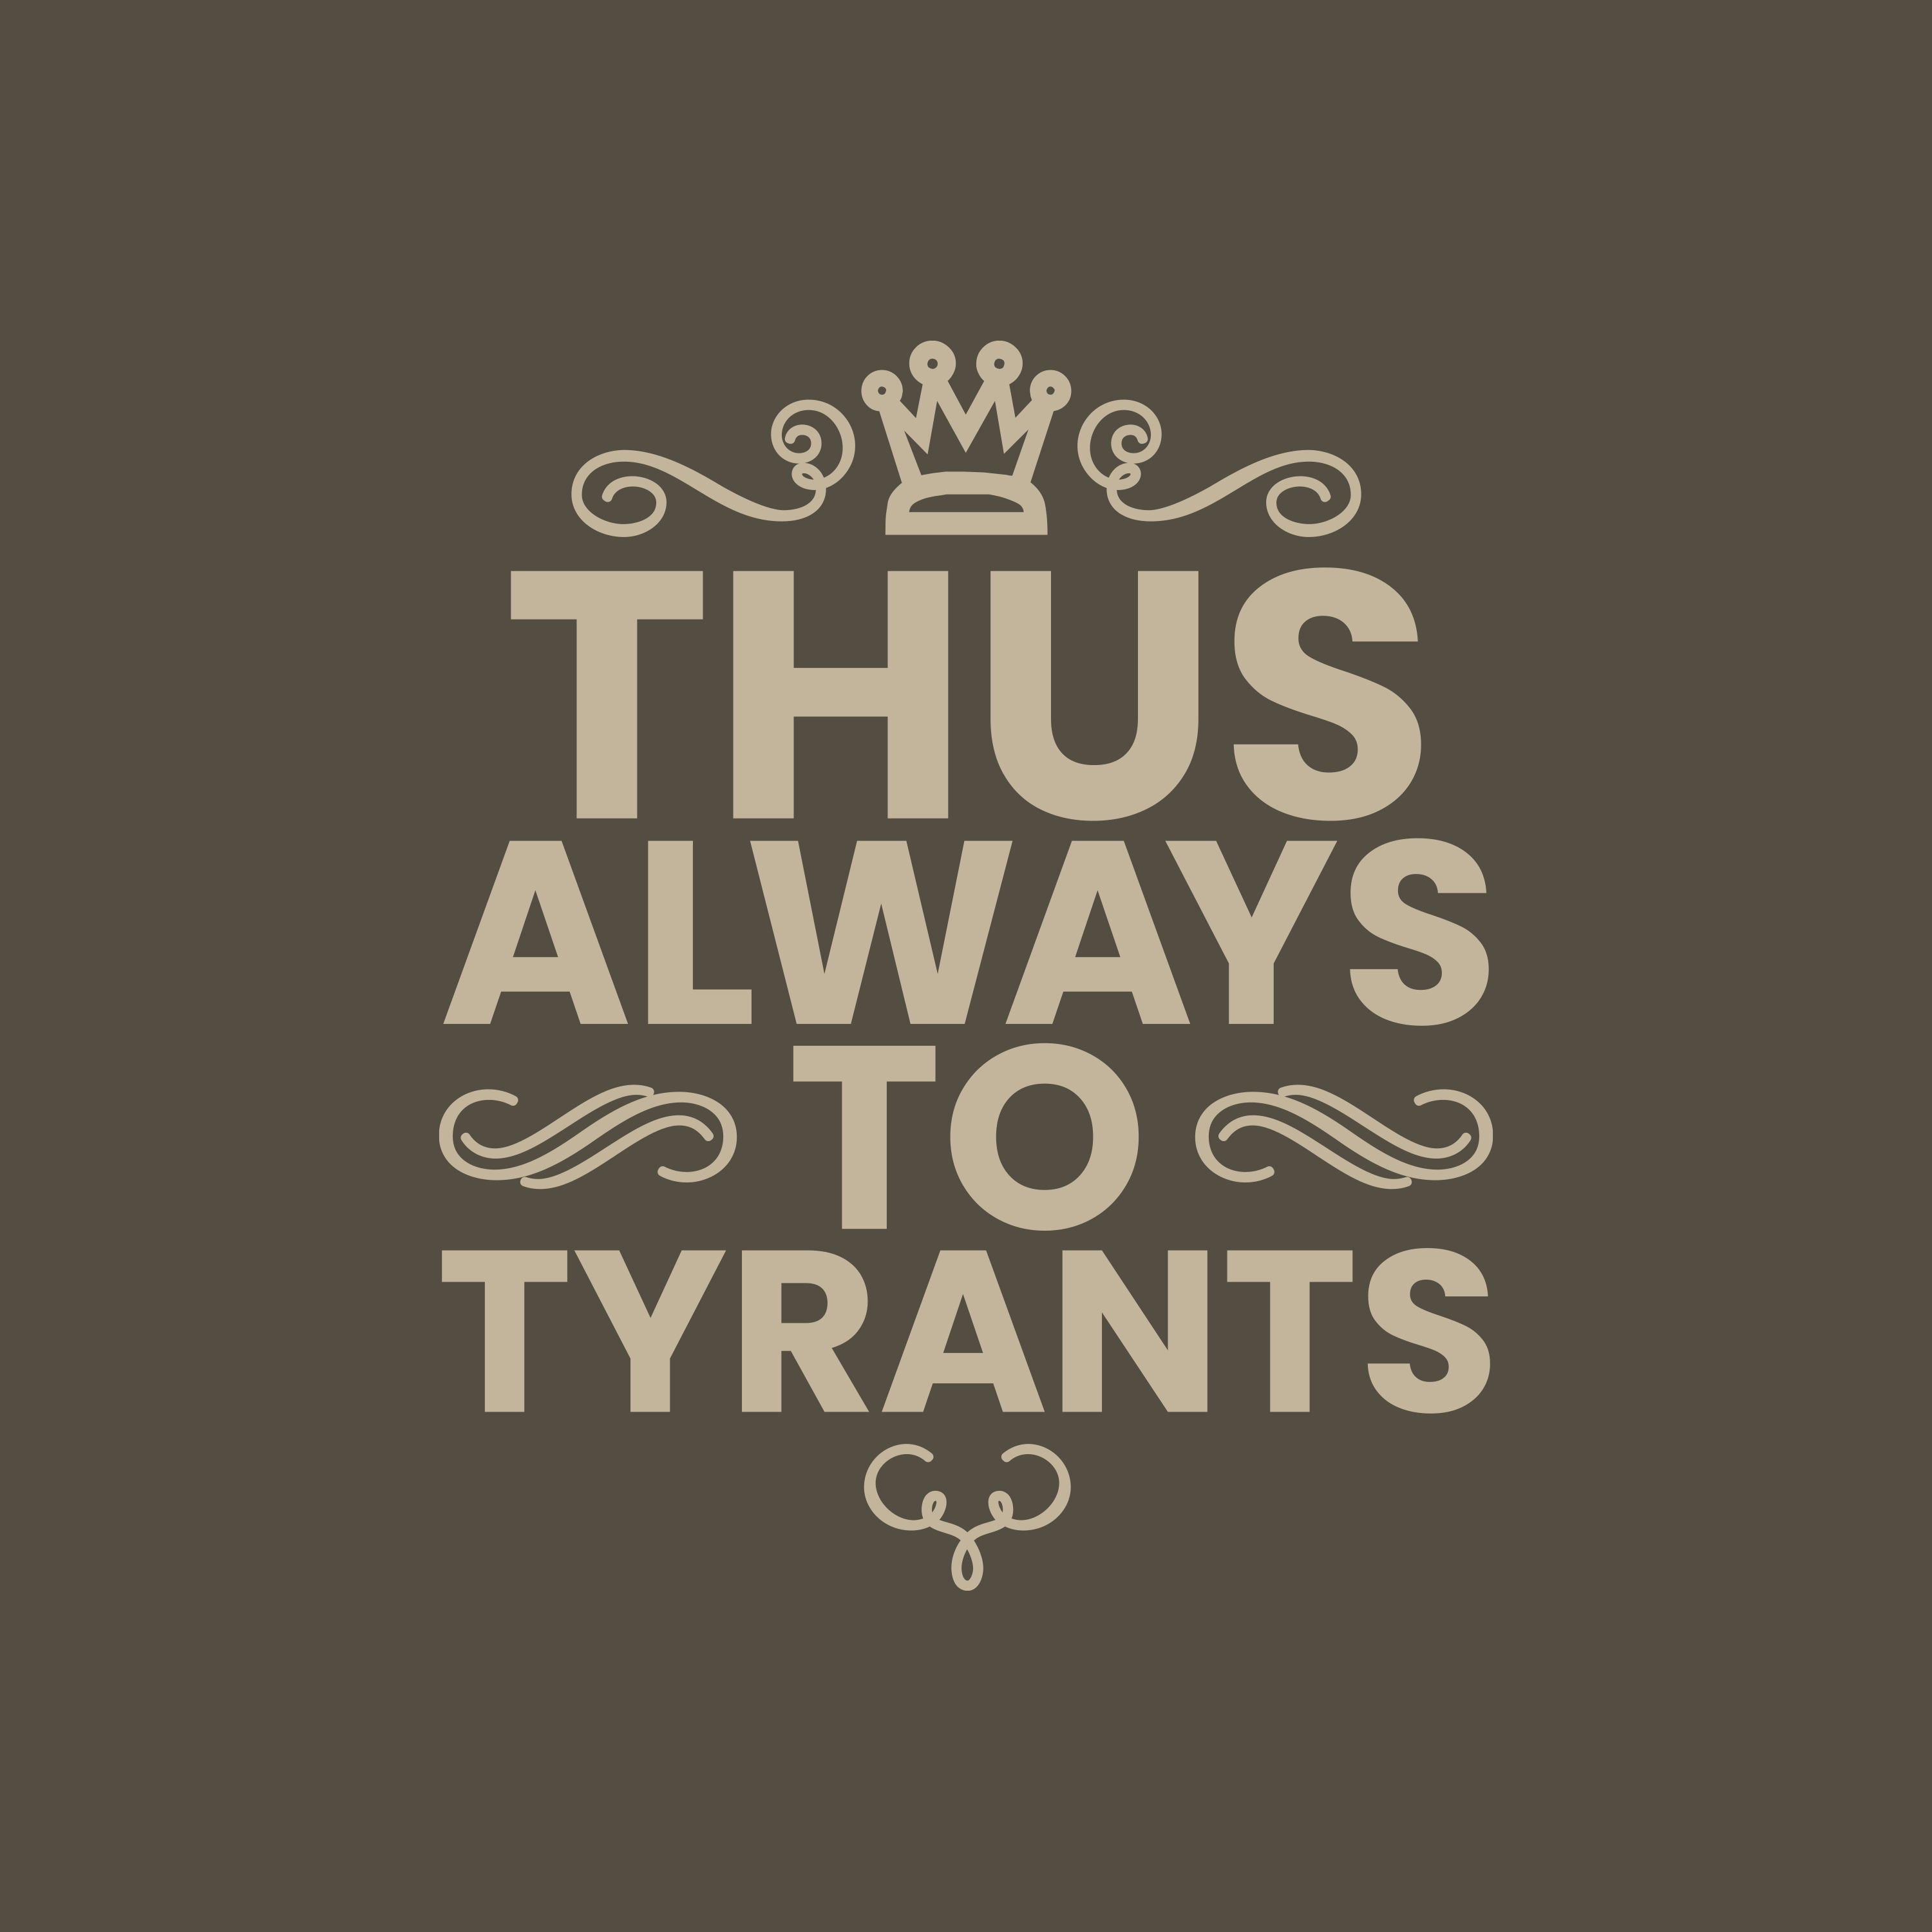 Always to Tyrants